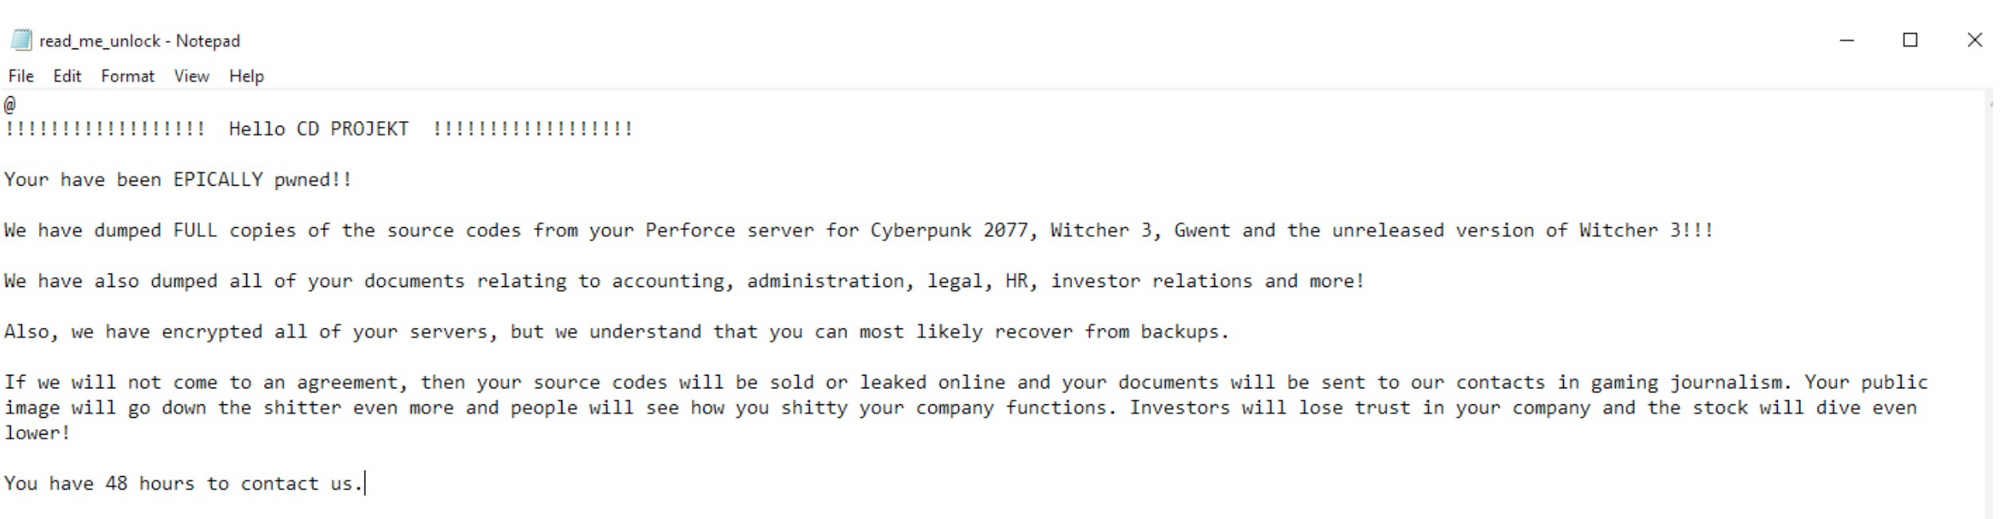 Mensagem deixada pelos operadores do ransomware, publcada pela CD Projekt, no Twitter. Foto: CD Projekt.